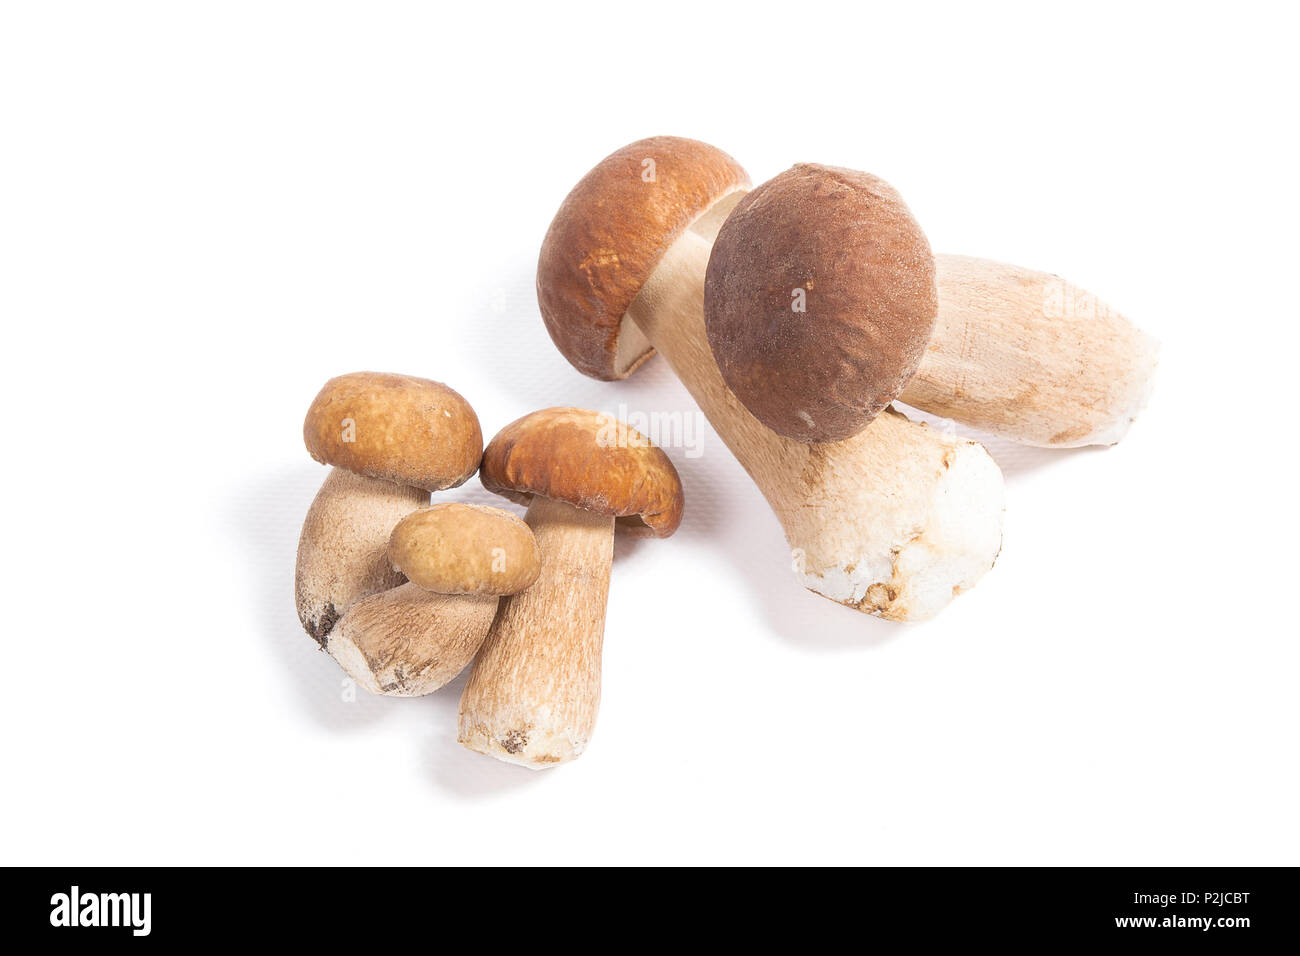 Harvested at autumn amazing edible mushrooms boletus edulis (king bolete) known as porcini mushrooms. Porcini mushrooms in front and several on back b Stock Photo